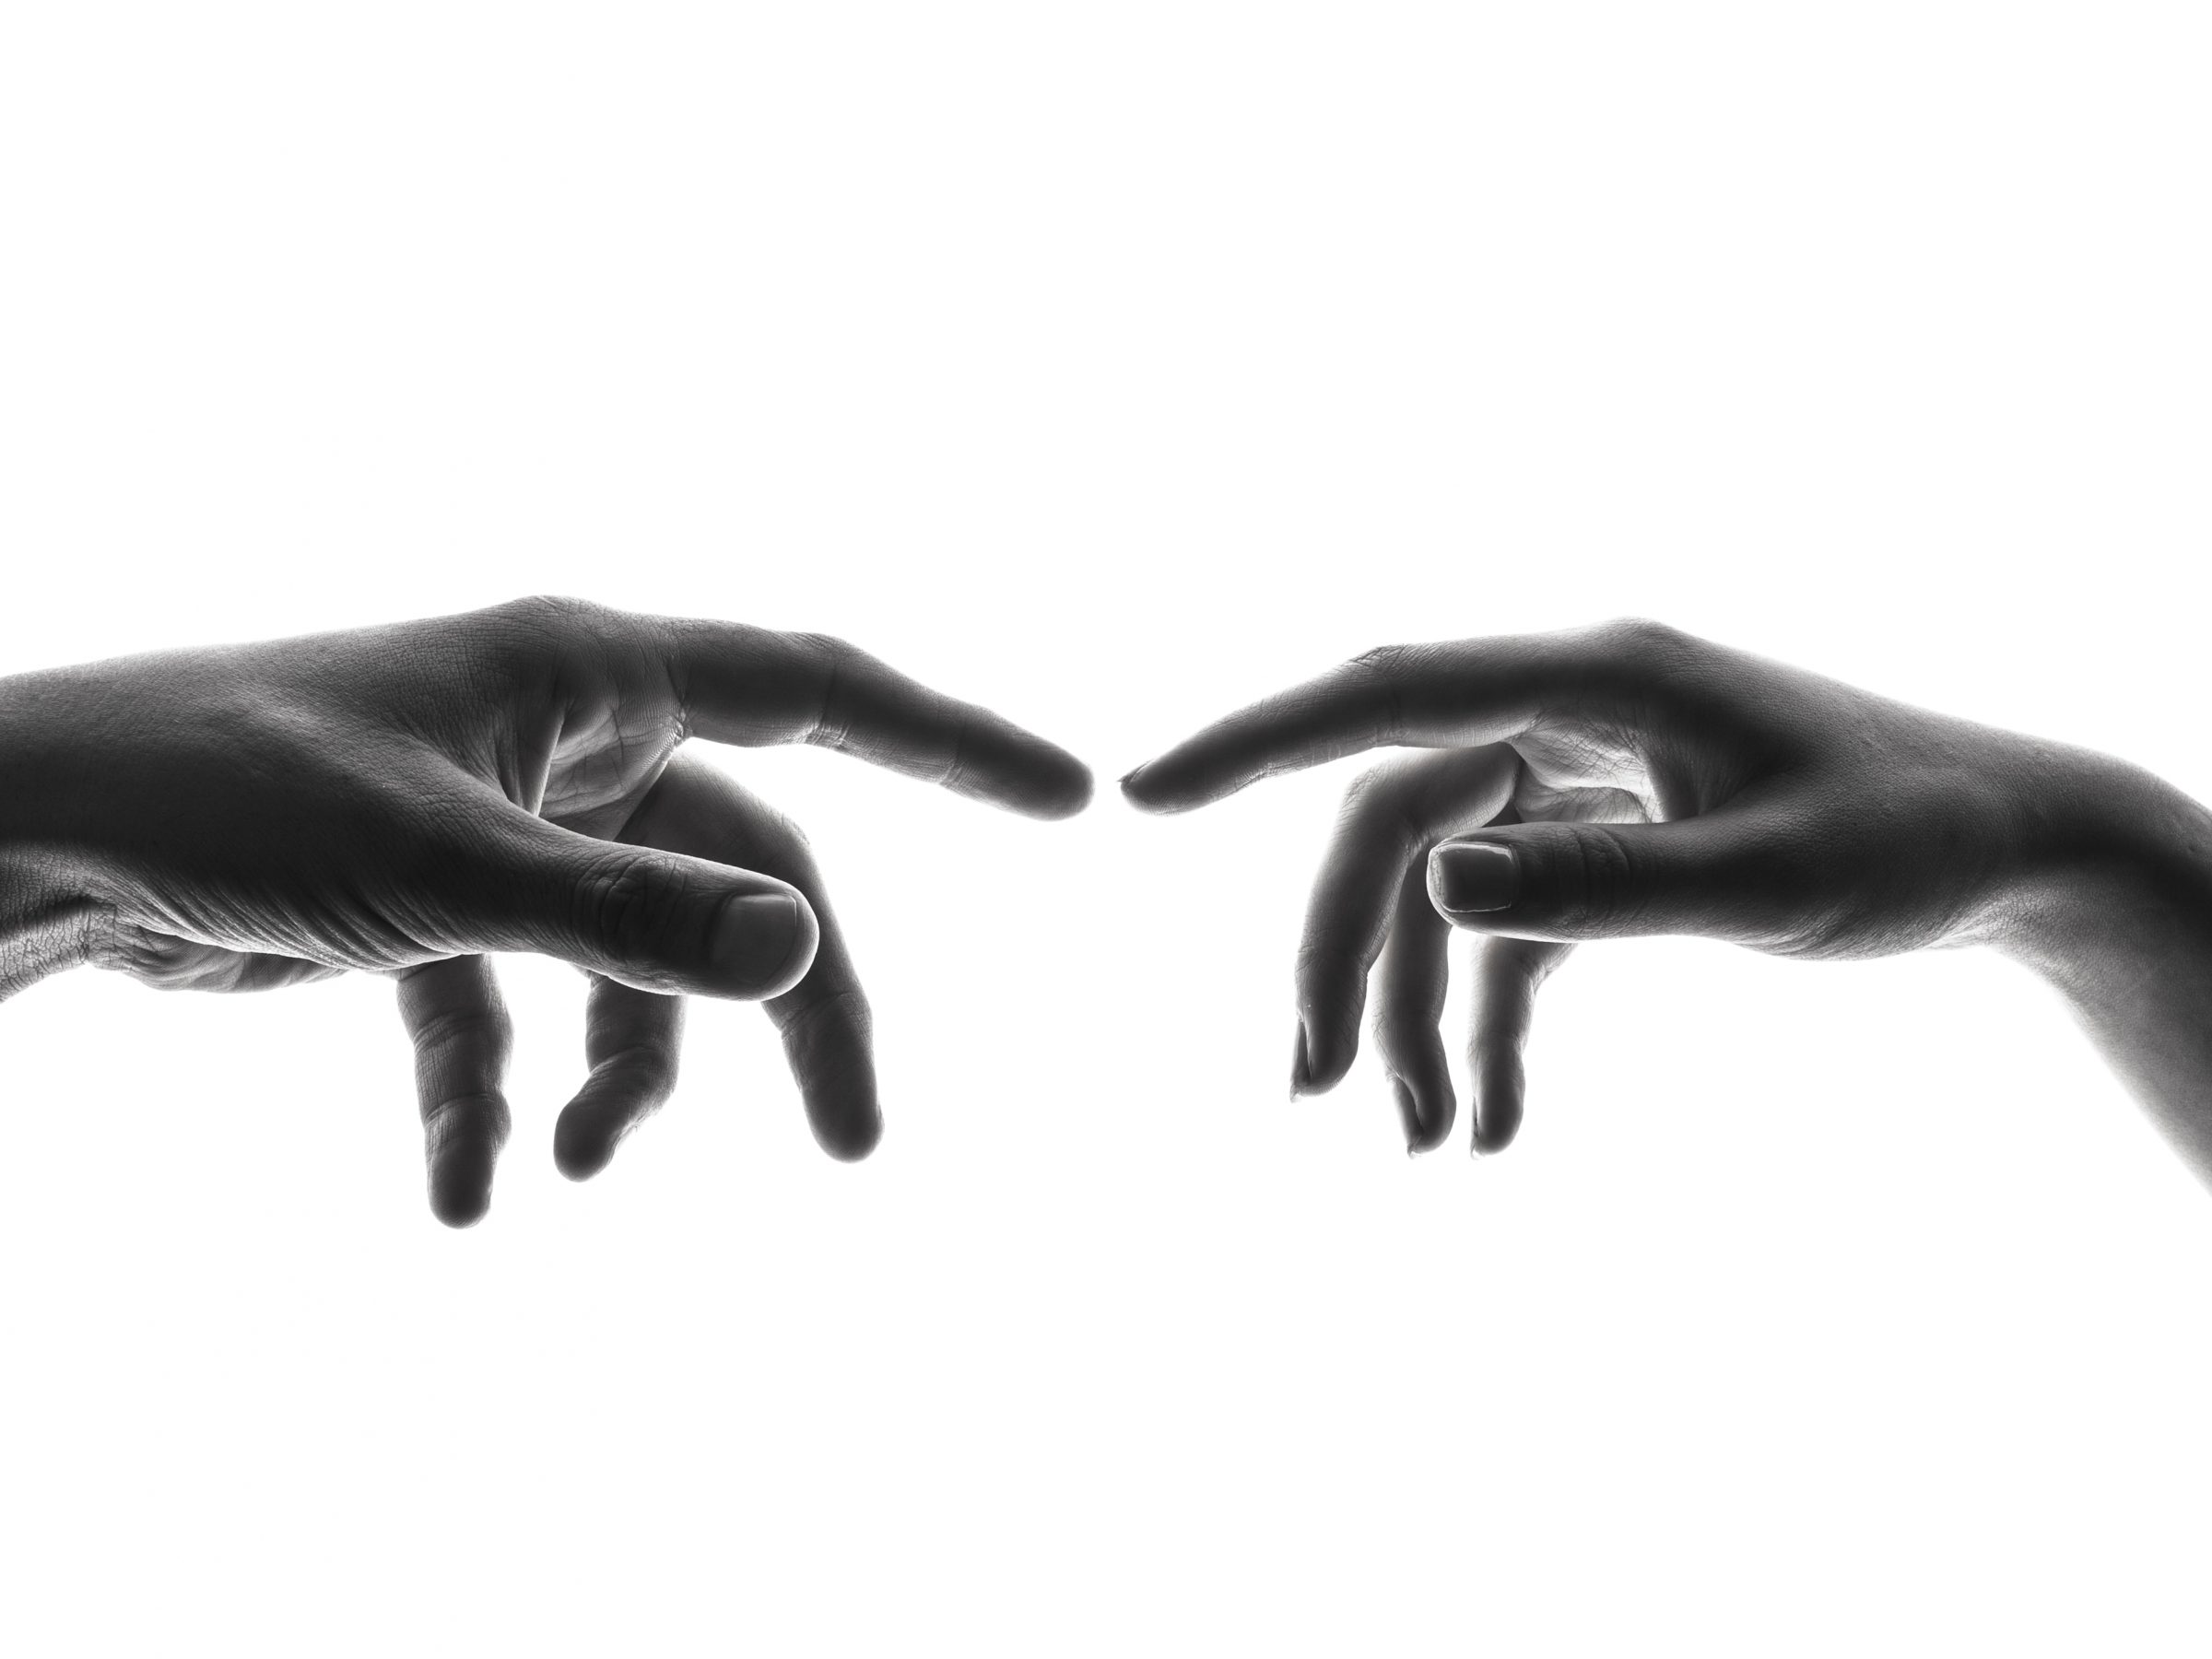 Hands in black & white